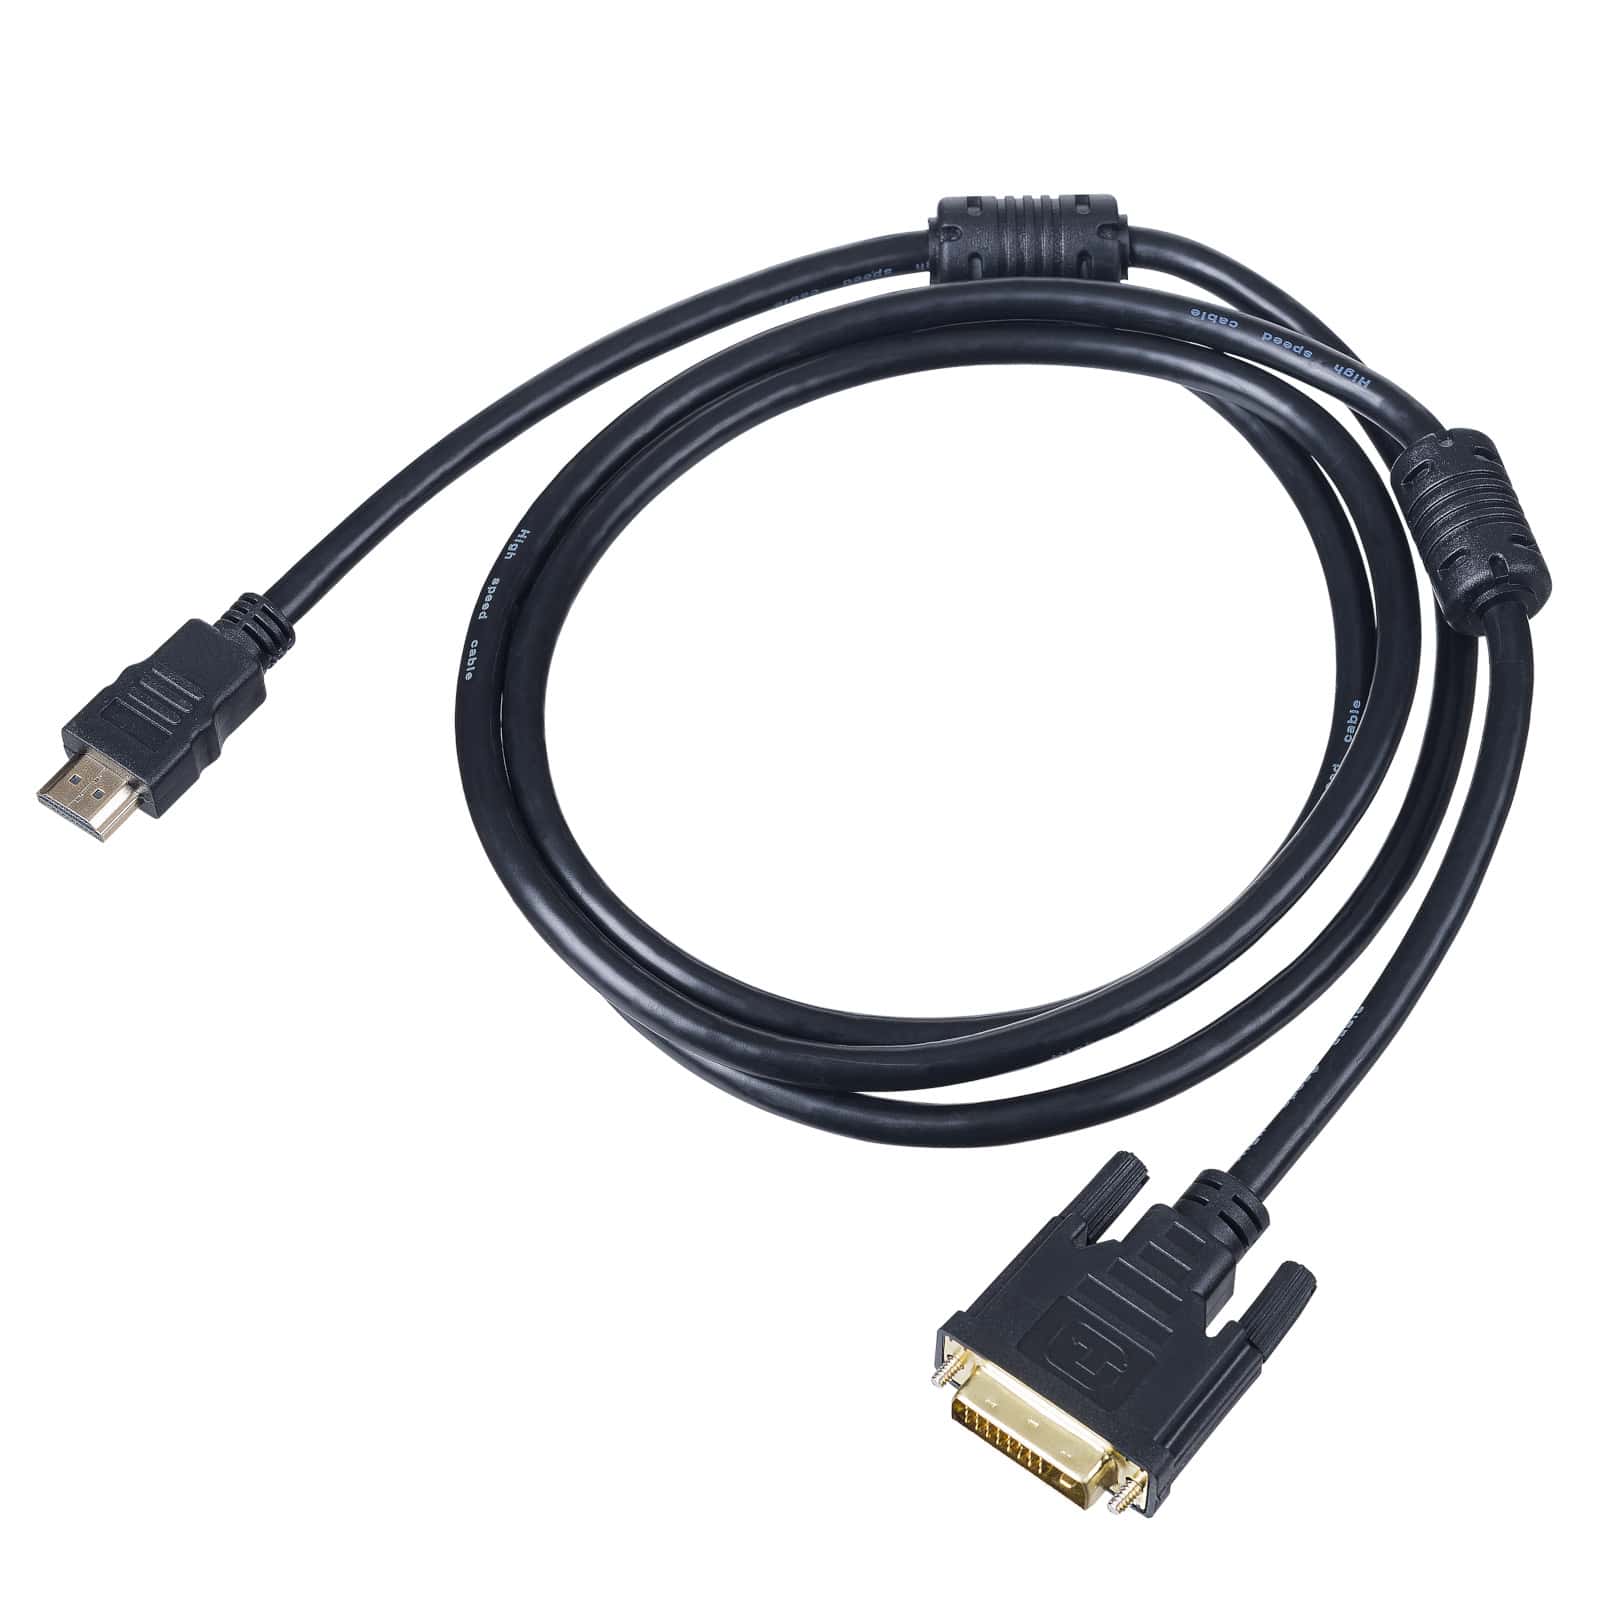 Main image Cable HDMI / DVI 24+1 AK-AV-11 1.8m